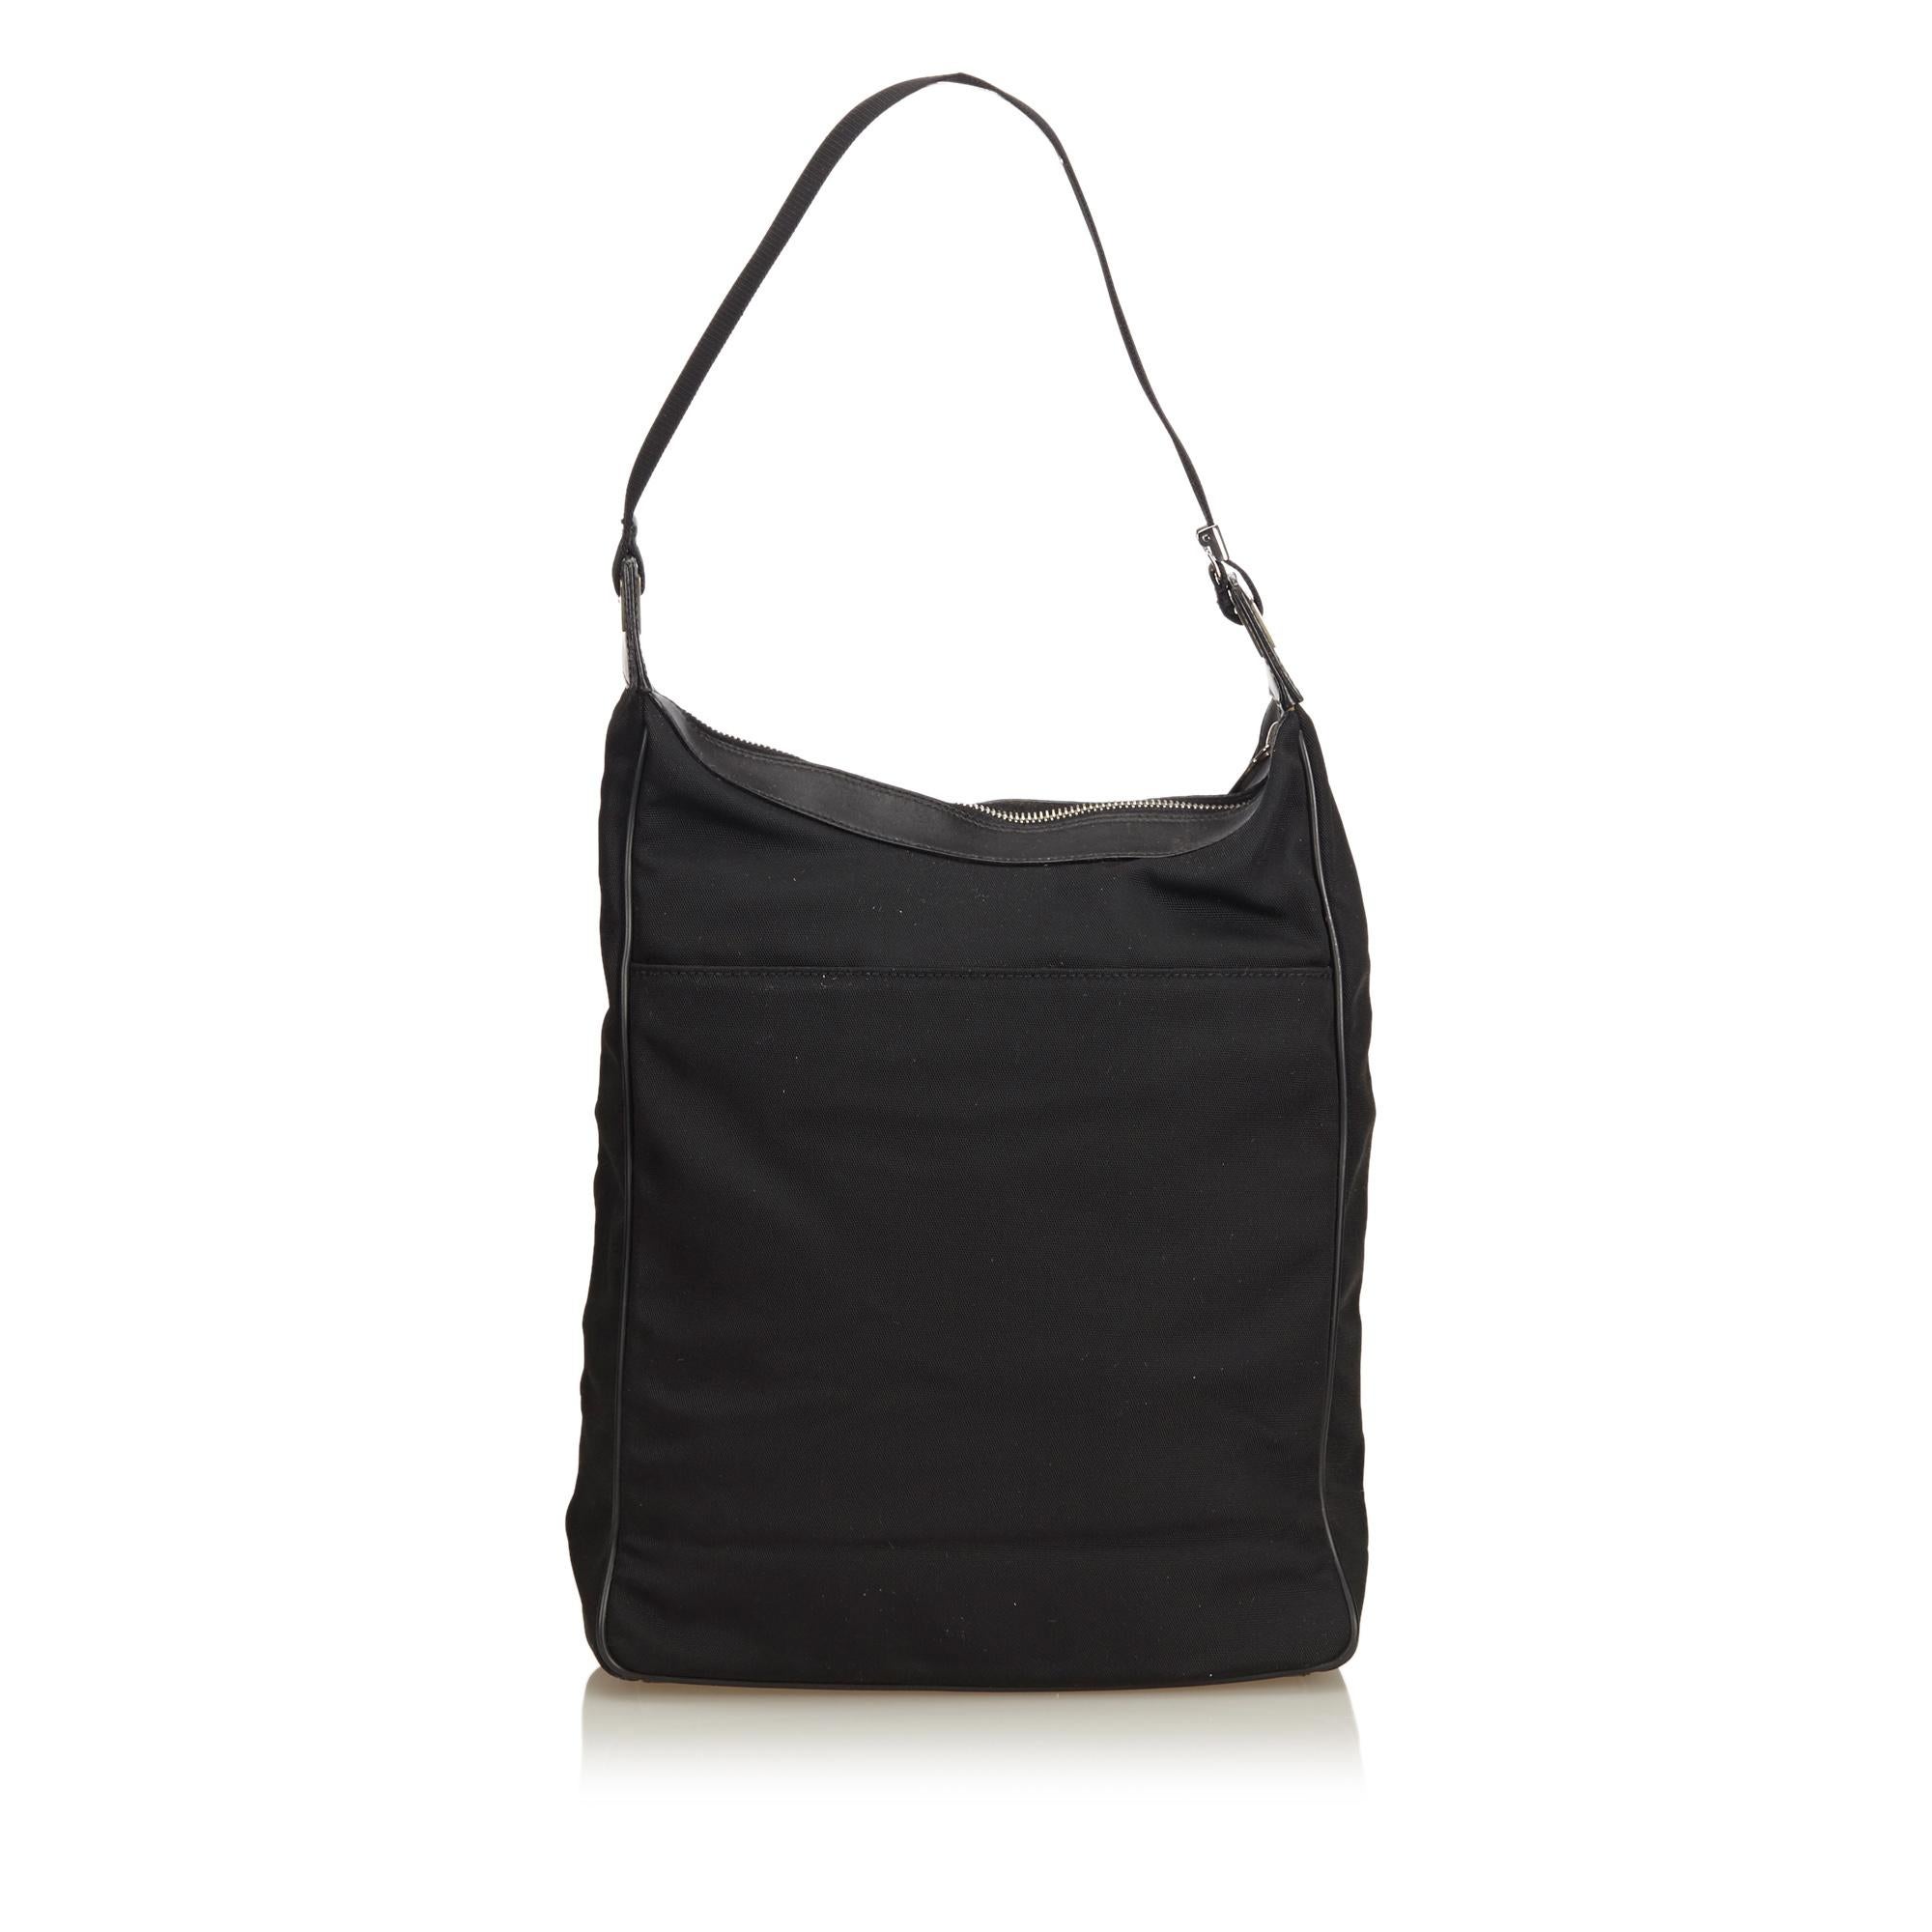 Gucci Black Nylon Shoulder Bag In Good Condition For Sale In Orlando, FL